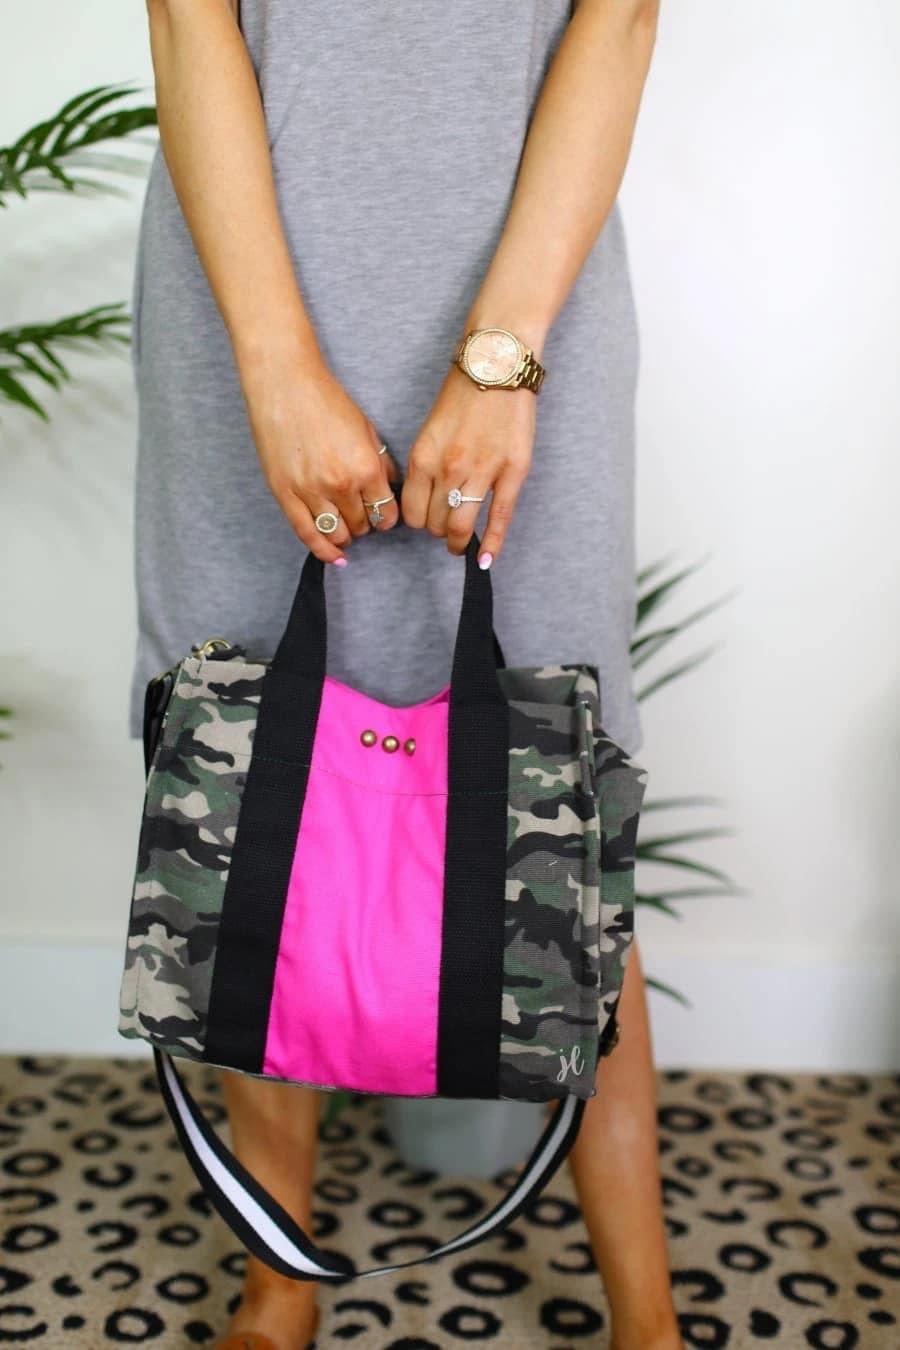 Canvas Tote Bag Leopard or Pink Camo - Shop women apparel, Jewelry, bath & beauty products online - Arwen's Boutique